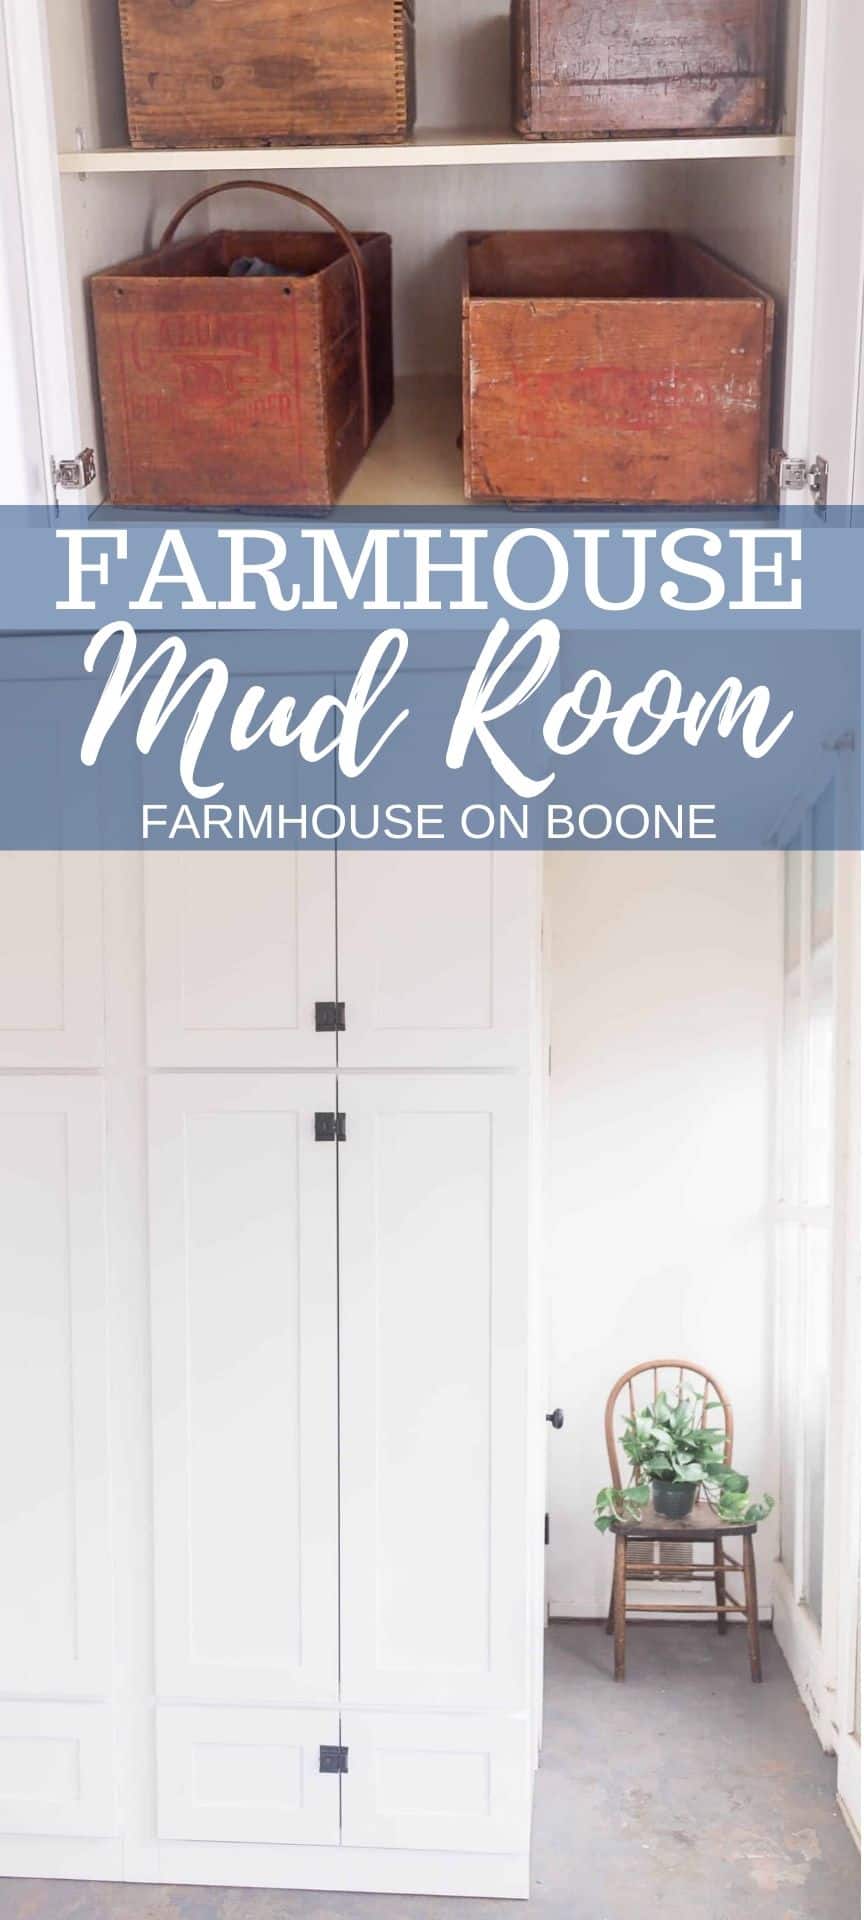 https://www.farmhouseonboone.com/wp-content/uploads/2020/03/Farmhouse-Mud-Room-3-1.jpg